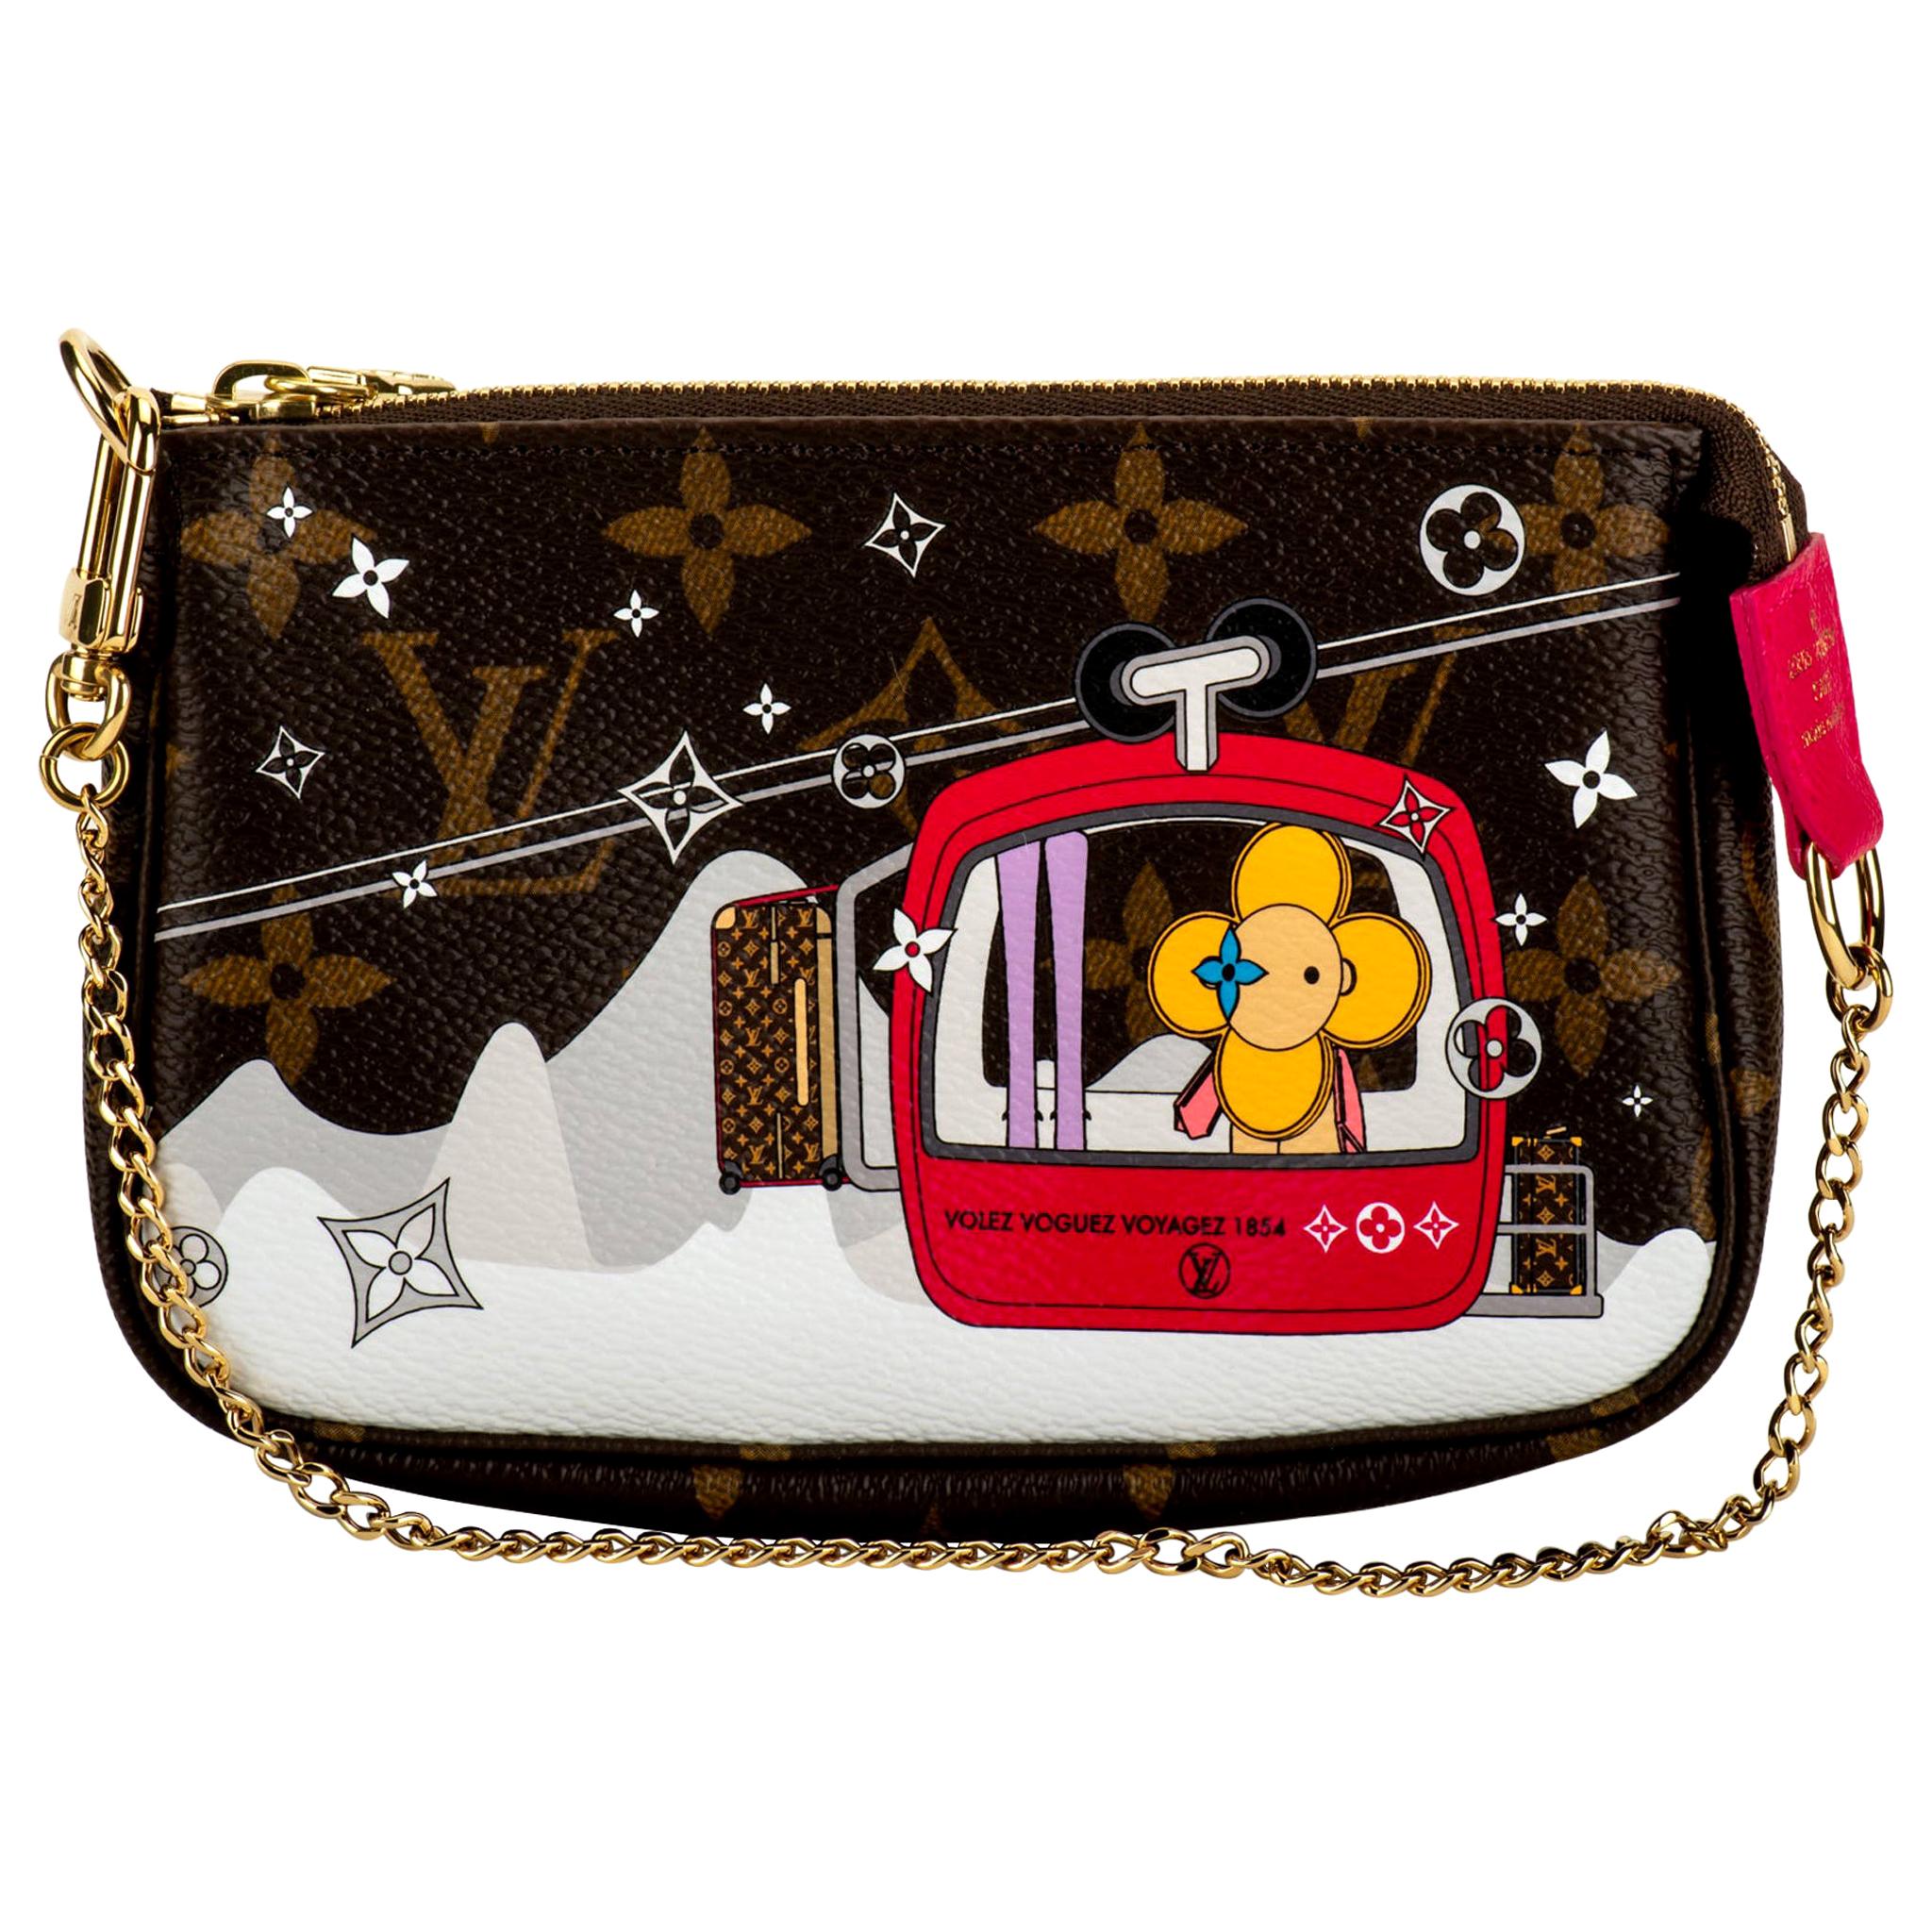 New in Box Louis Vuitton Christmas Limited Edition Megeve Pouchette Bag For Sale